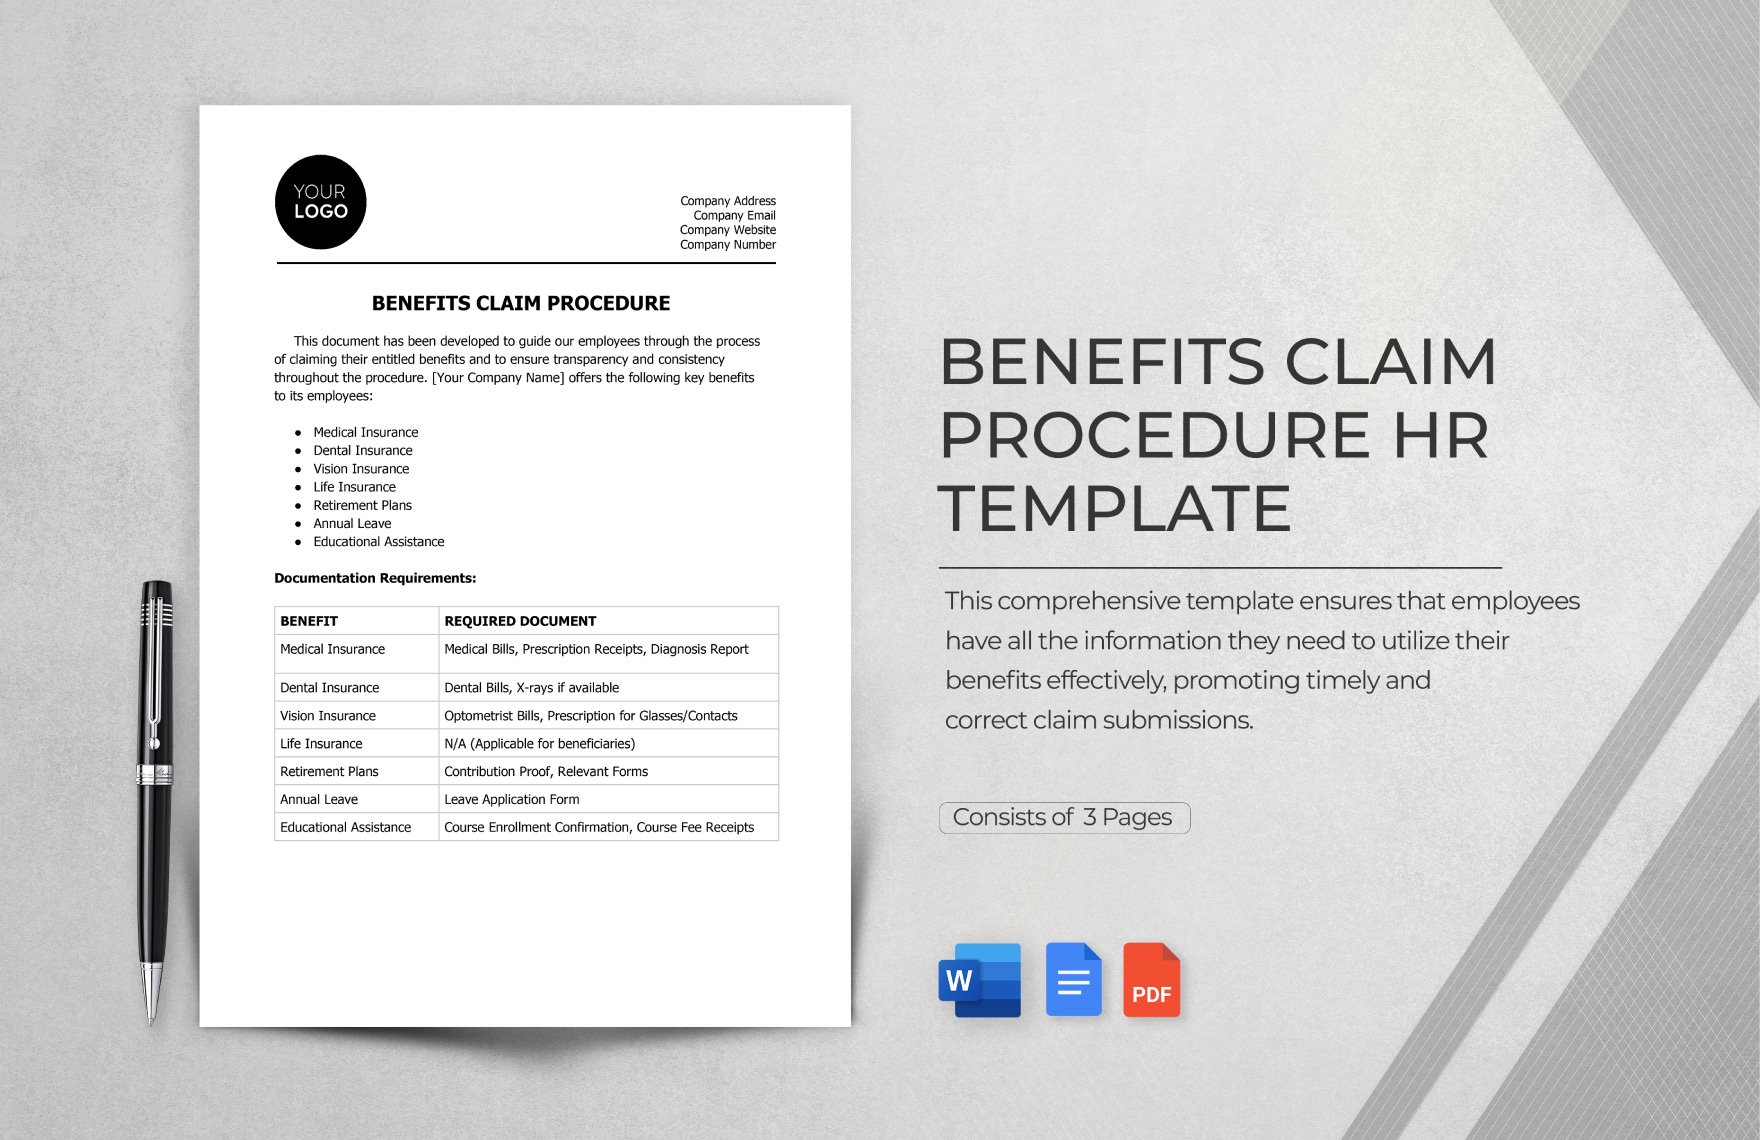 Benefits Claim Procedure HR Template